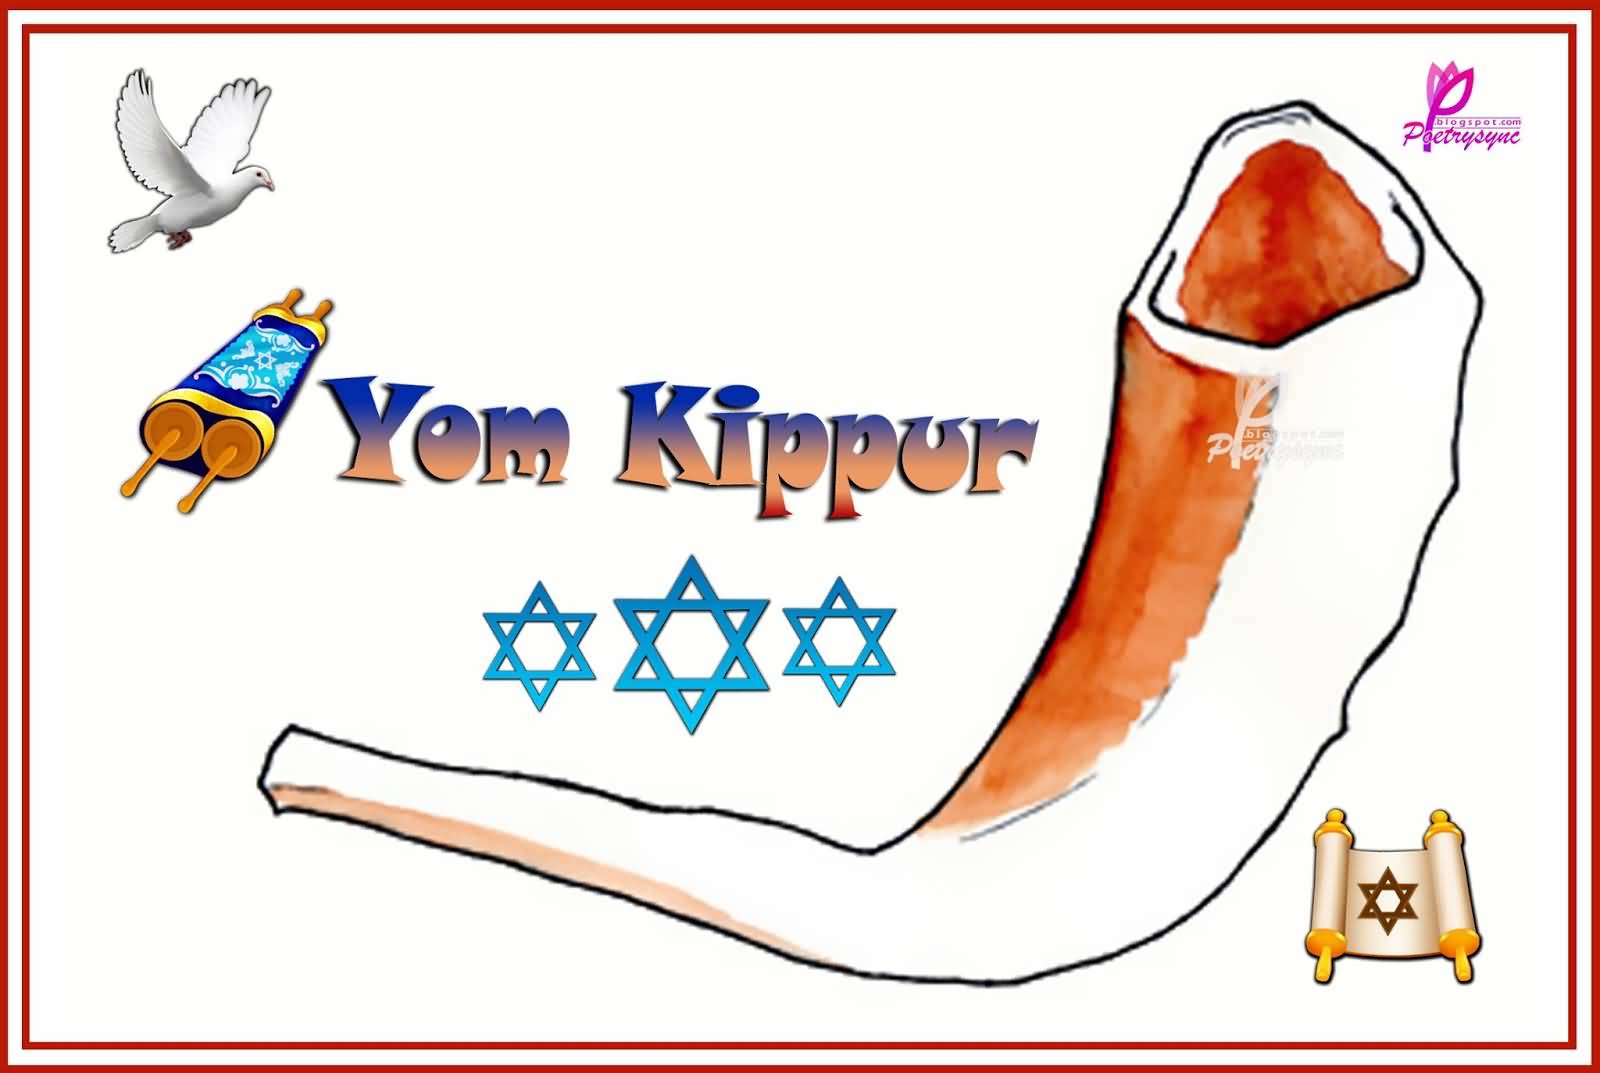 Wonderful Yom Kippur Wishes, Greetings & Image